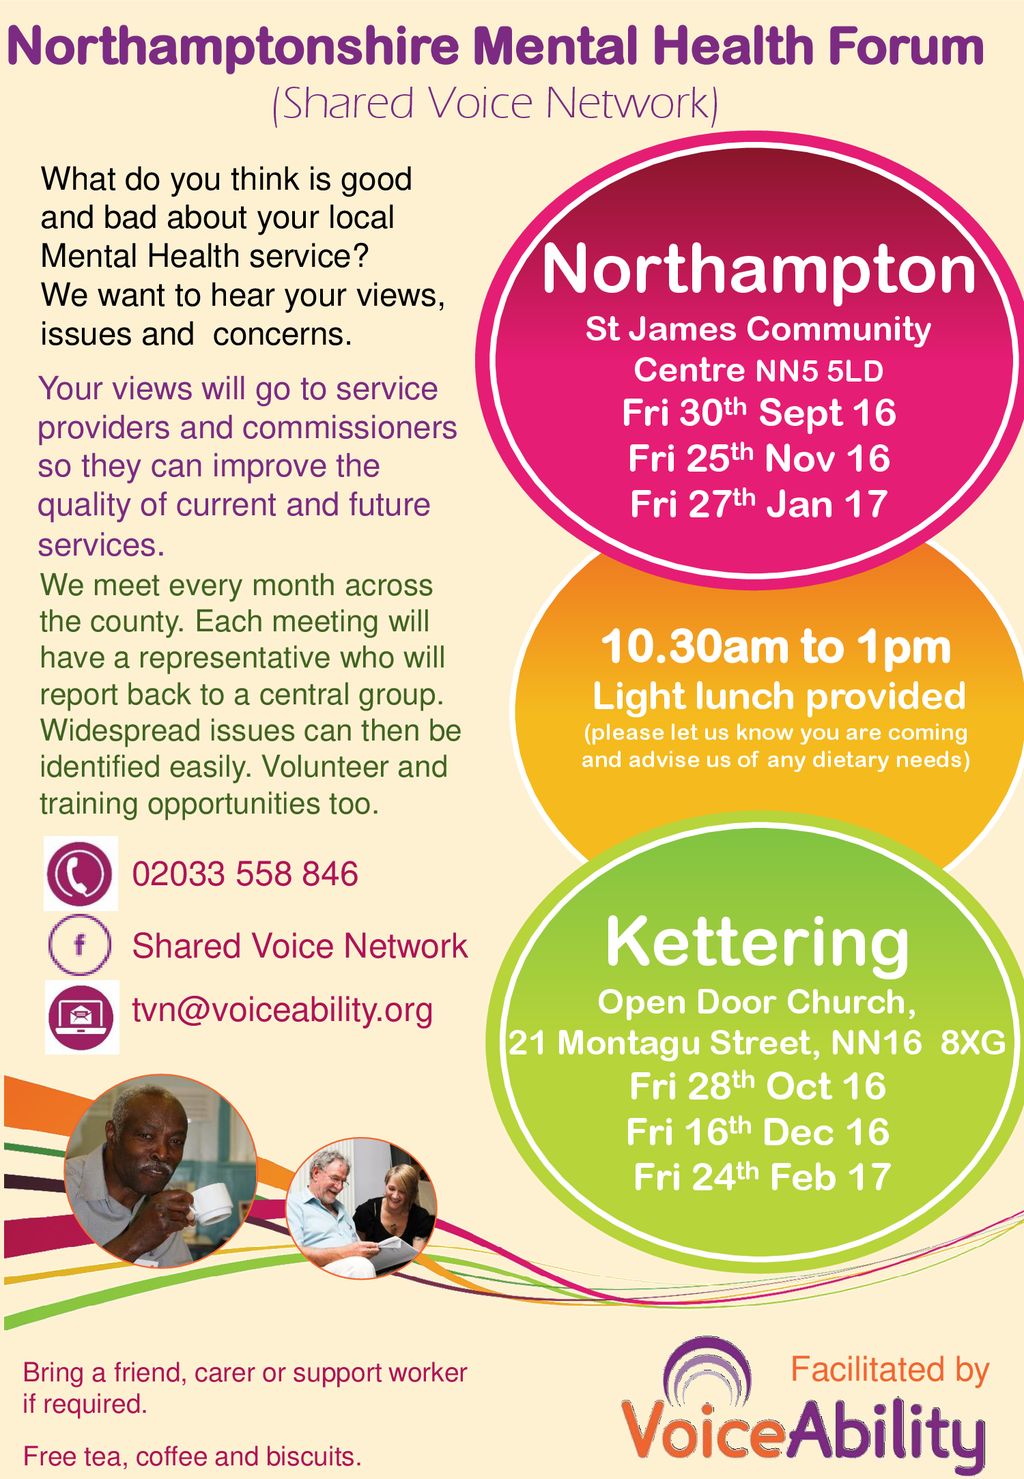 Northamptonshire Mental Health Forum